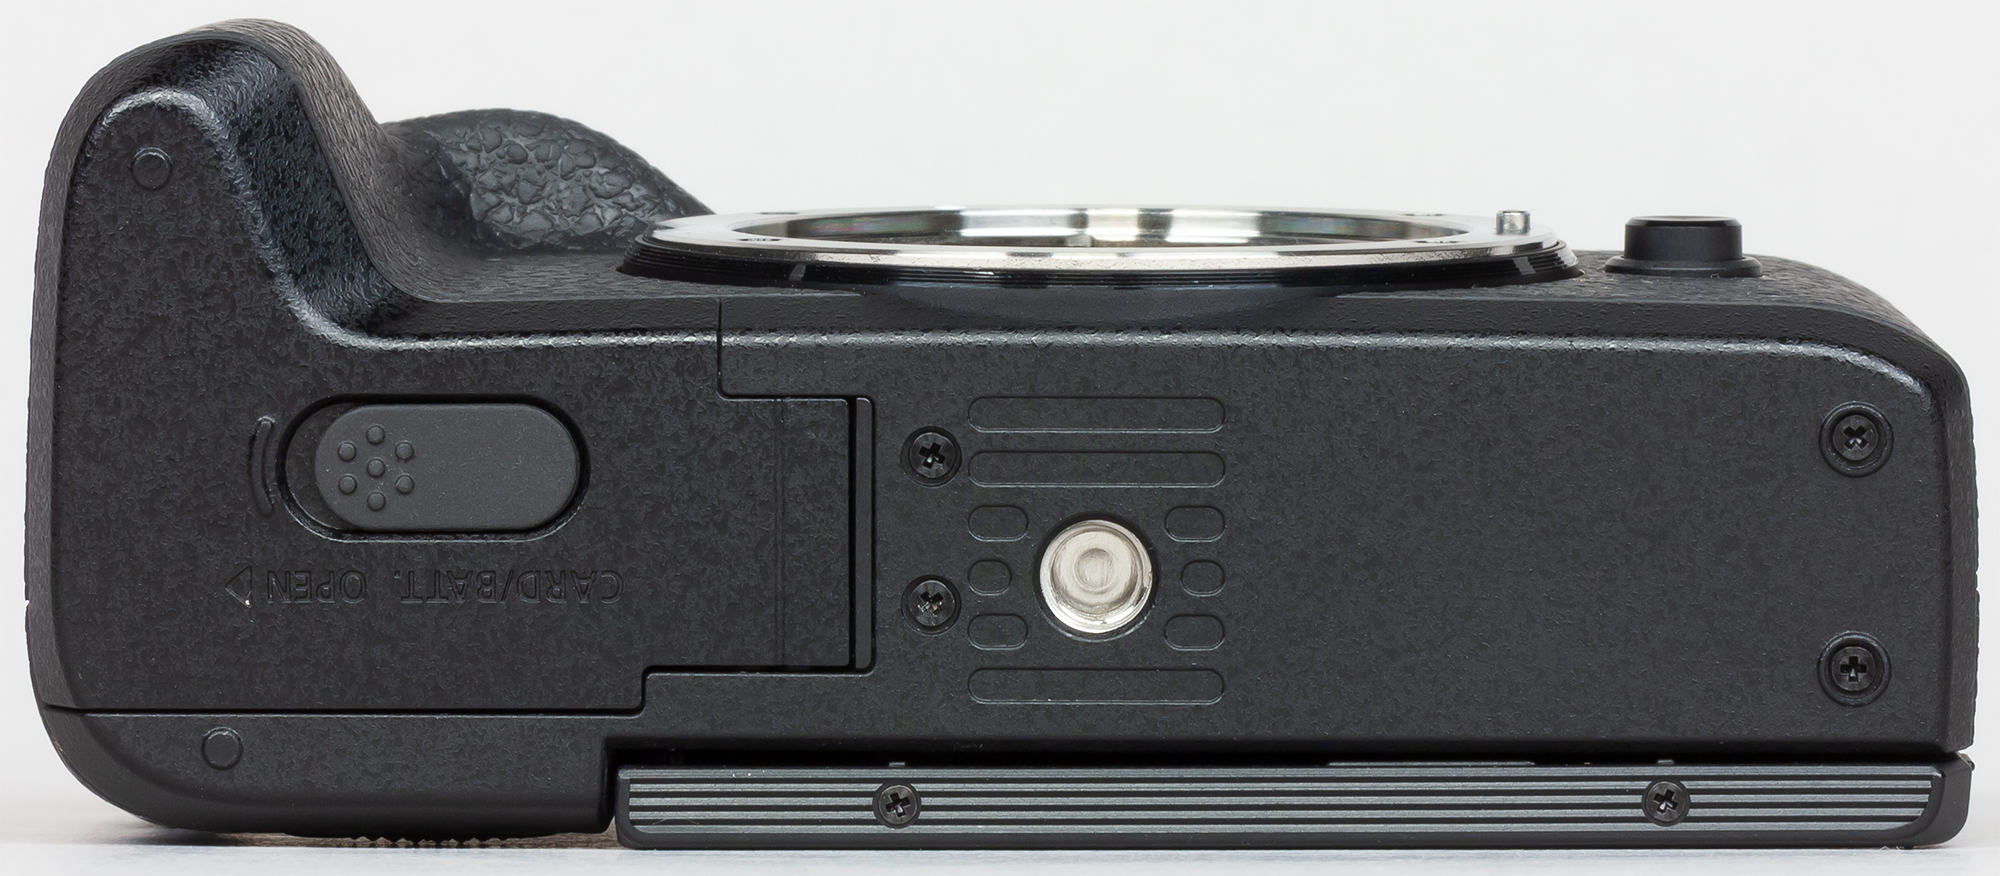 M6 mark ii. Canon m6 Mark II HDMI. Чехол Canon EOS M вид снизу. Canon m6 Mark II Батарейная крышка. Чехол Canon m100 вид снизу.